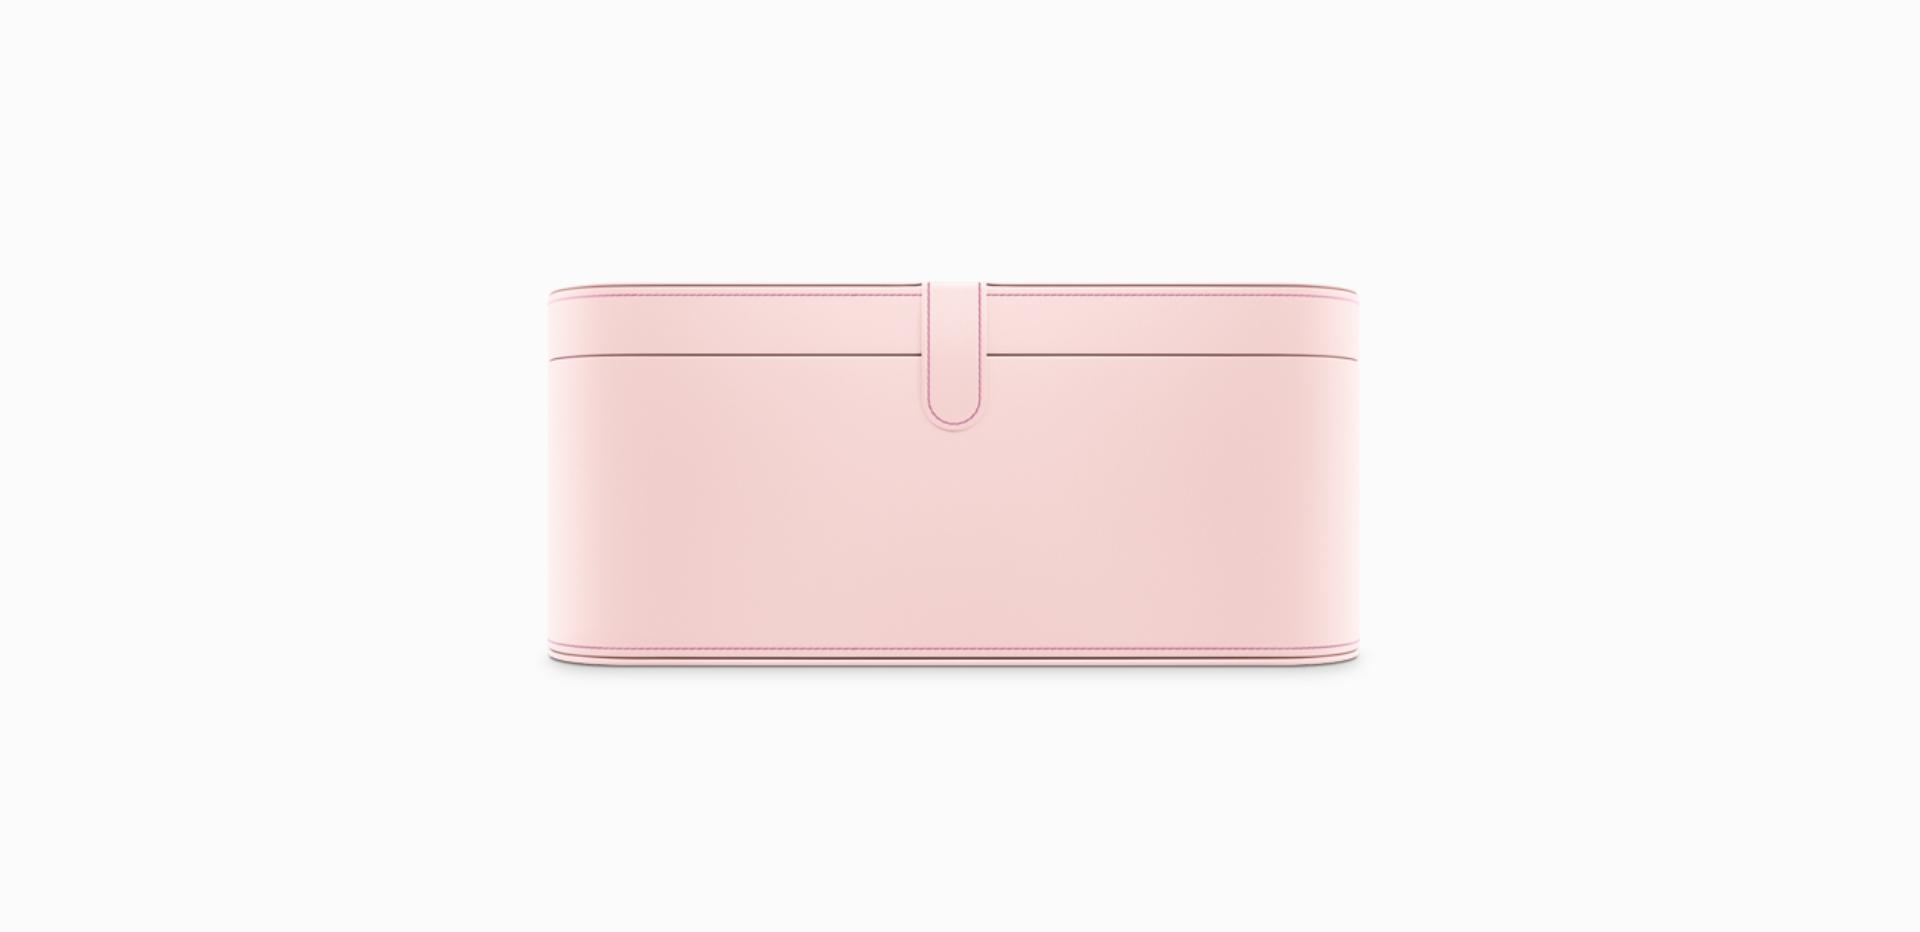  Pink presentation case